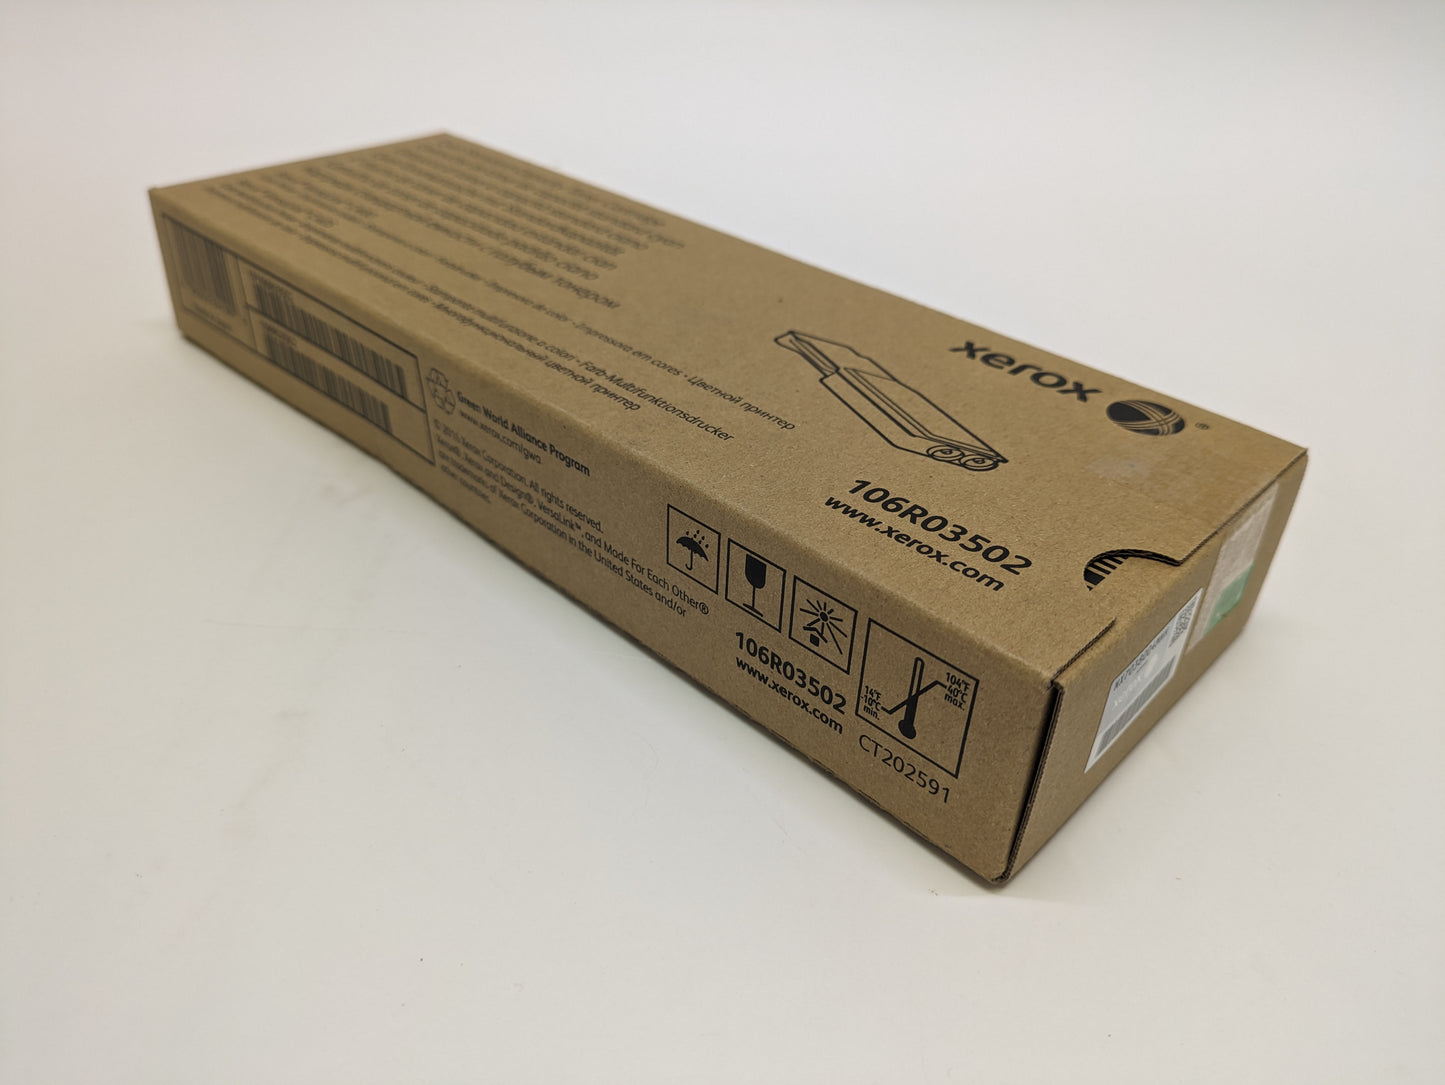 Xerox VersaLink C400/C405 Cyan Toner Cartridge - 106R03502 New